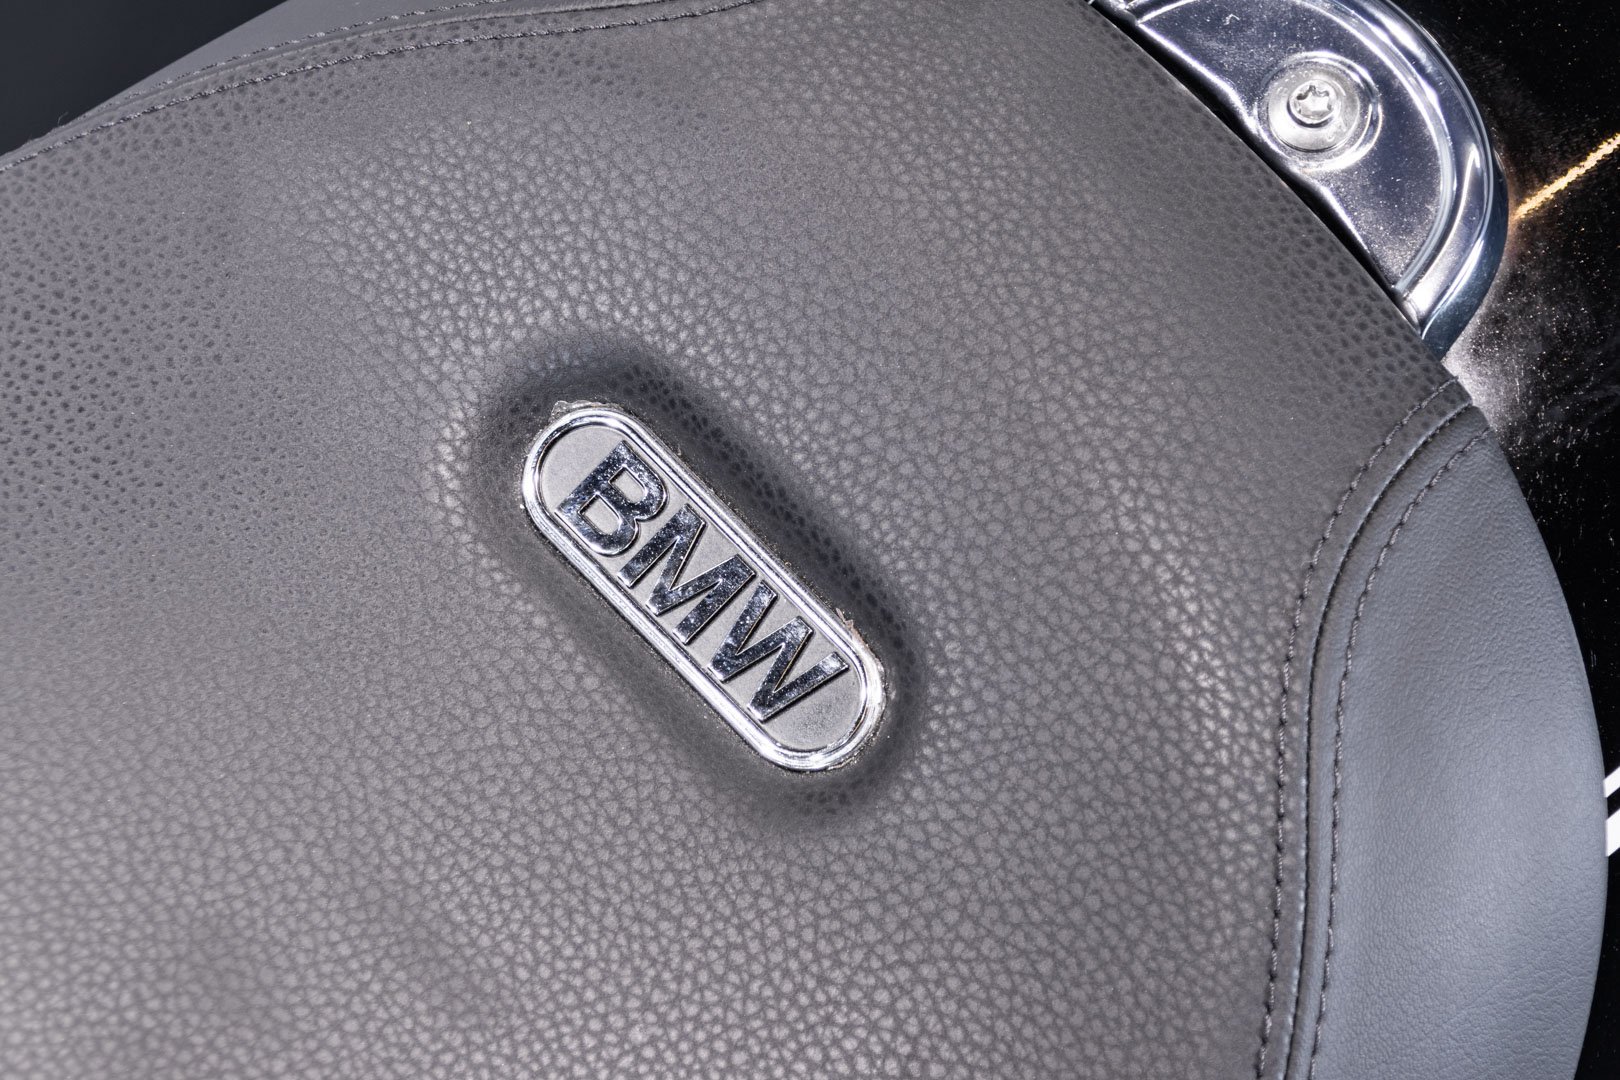 BMW 1800 First Edition 